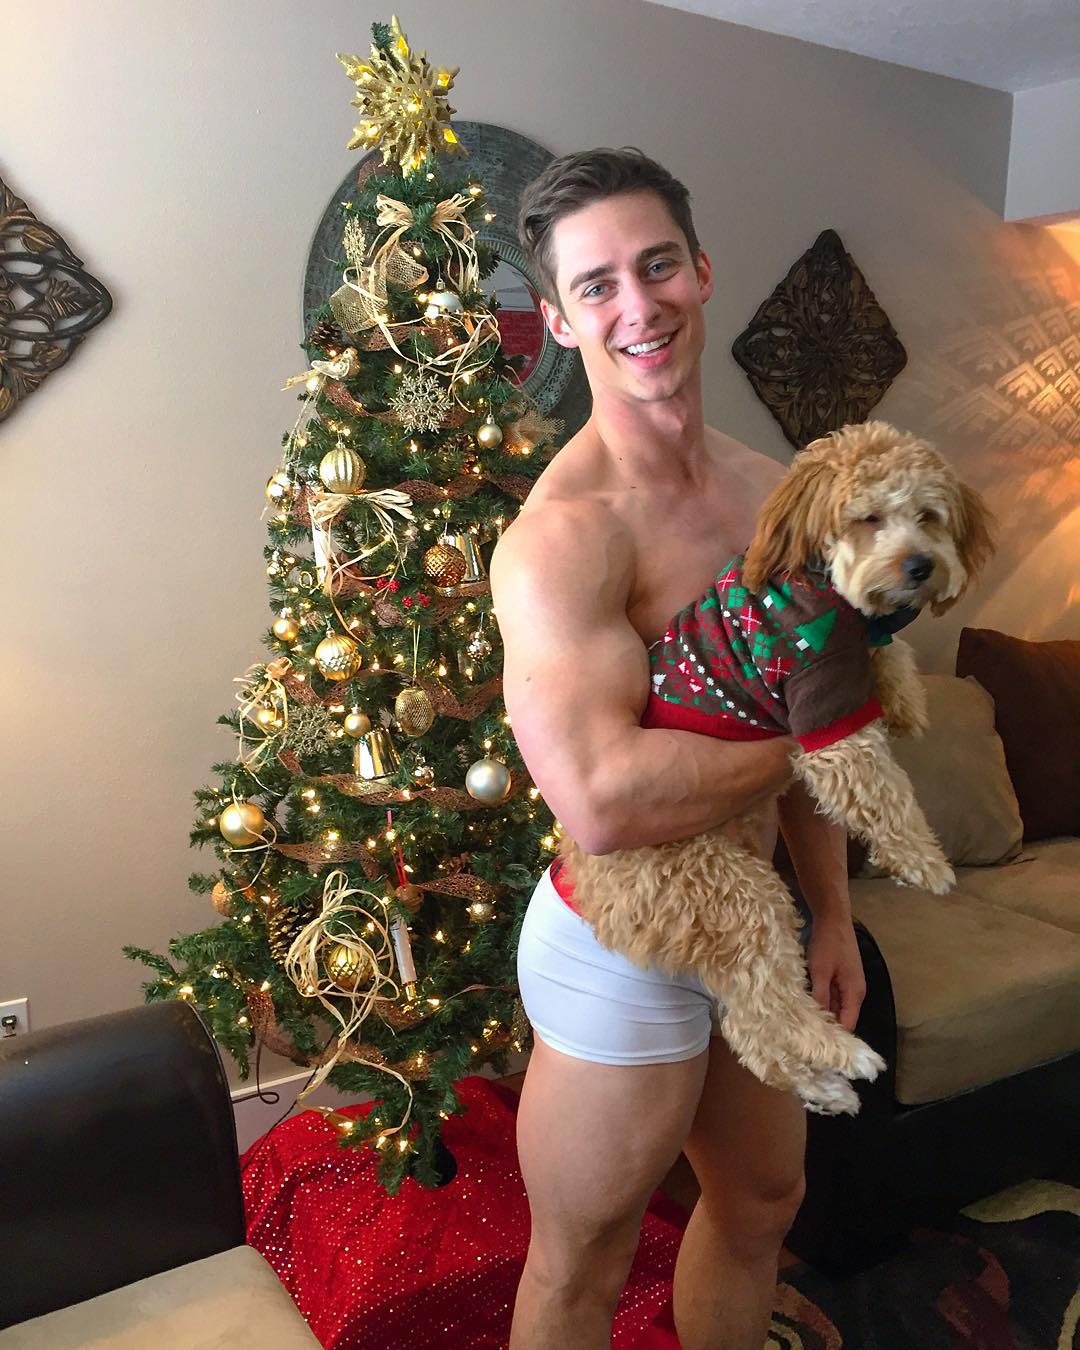 shirtless-dude-smiling-cute-dog-christmas-tree